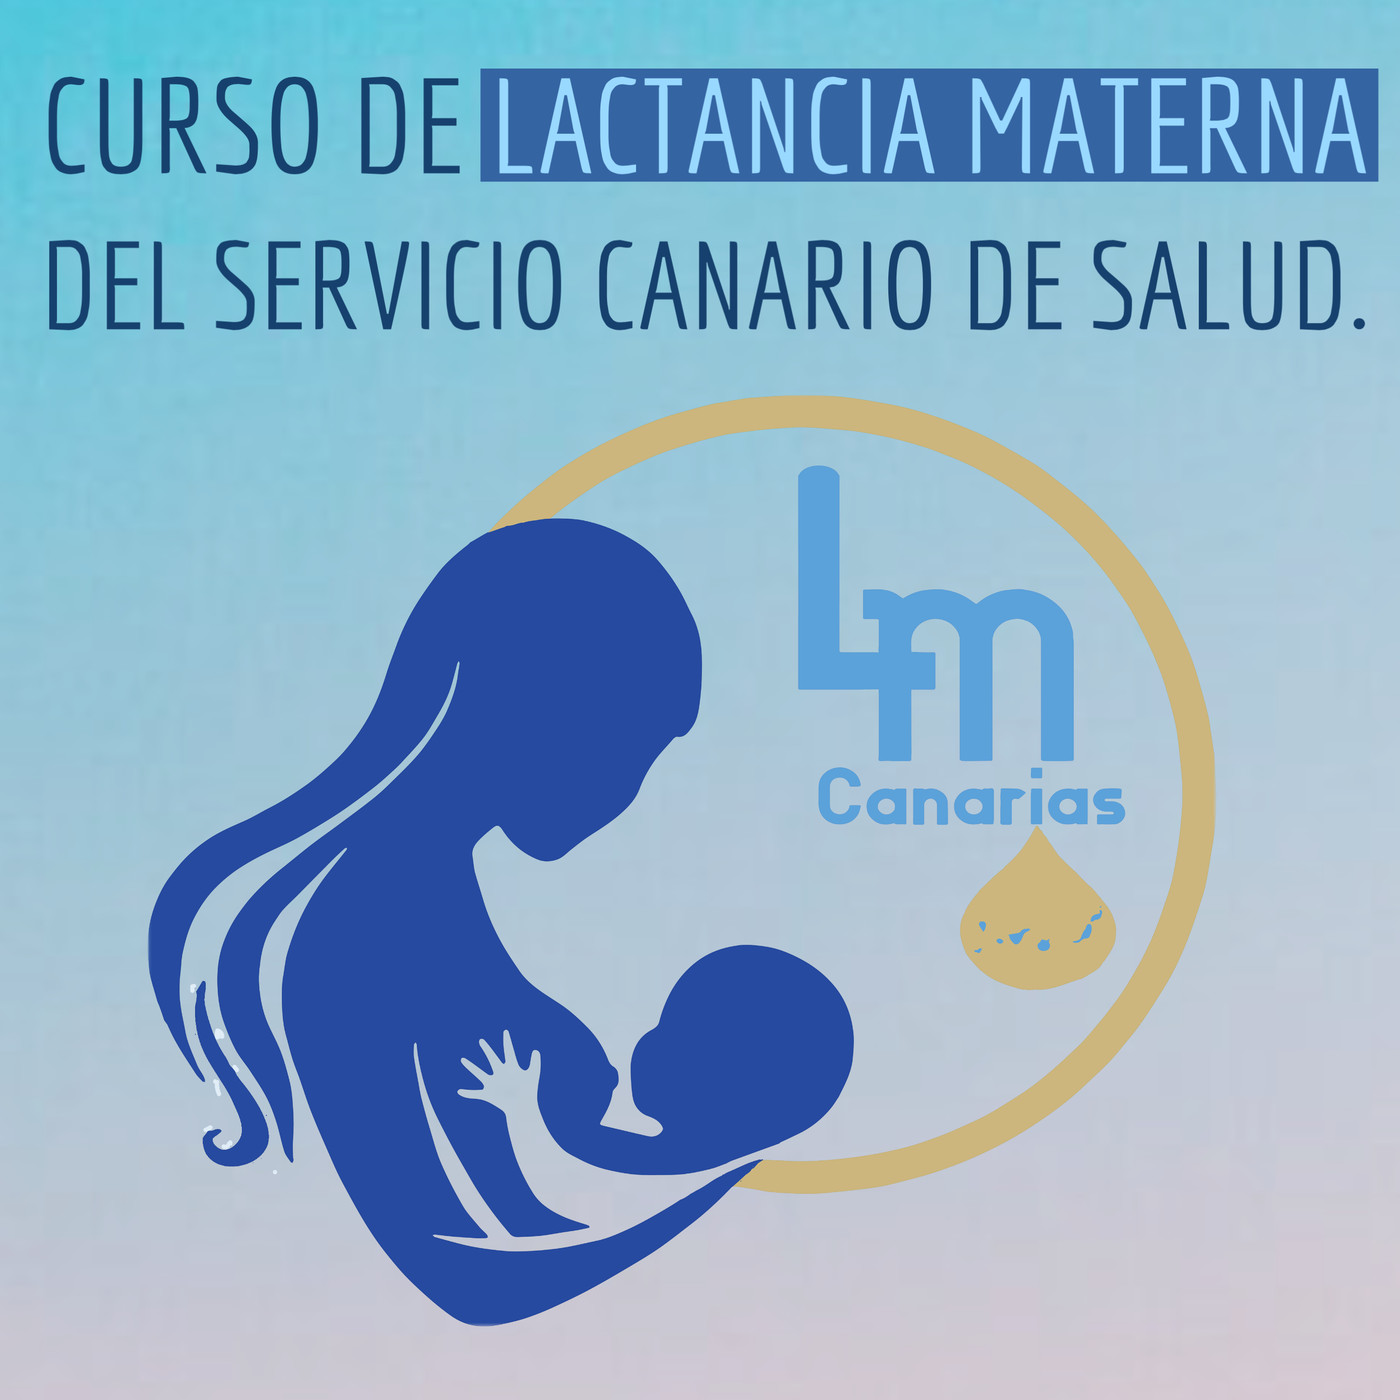 01.4.1 Fisiología de la lactancia materna.